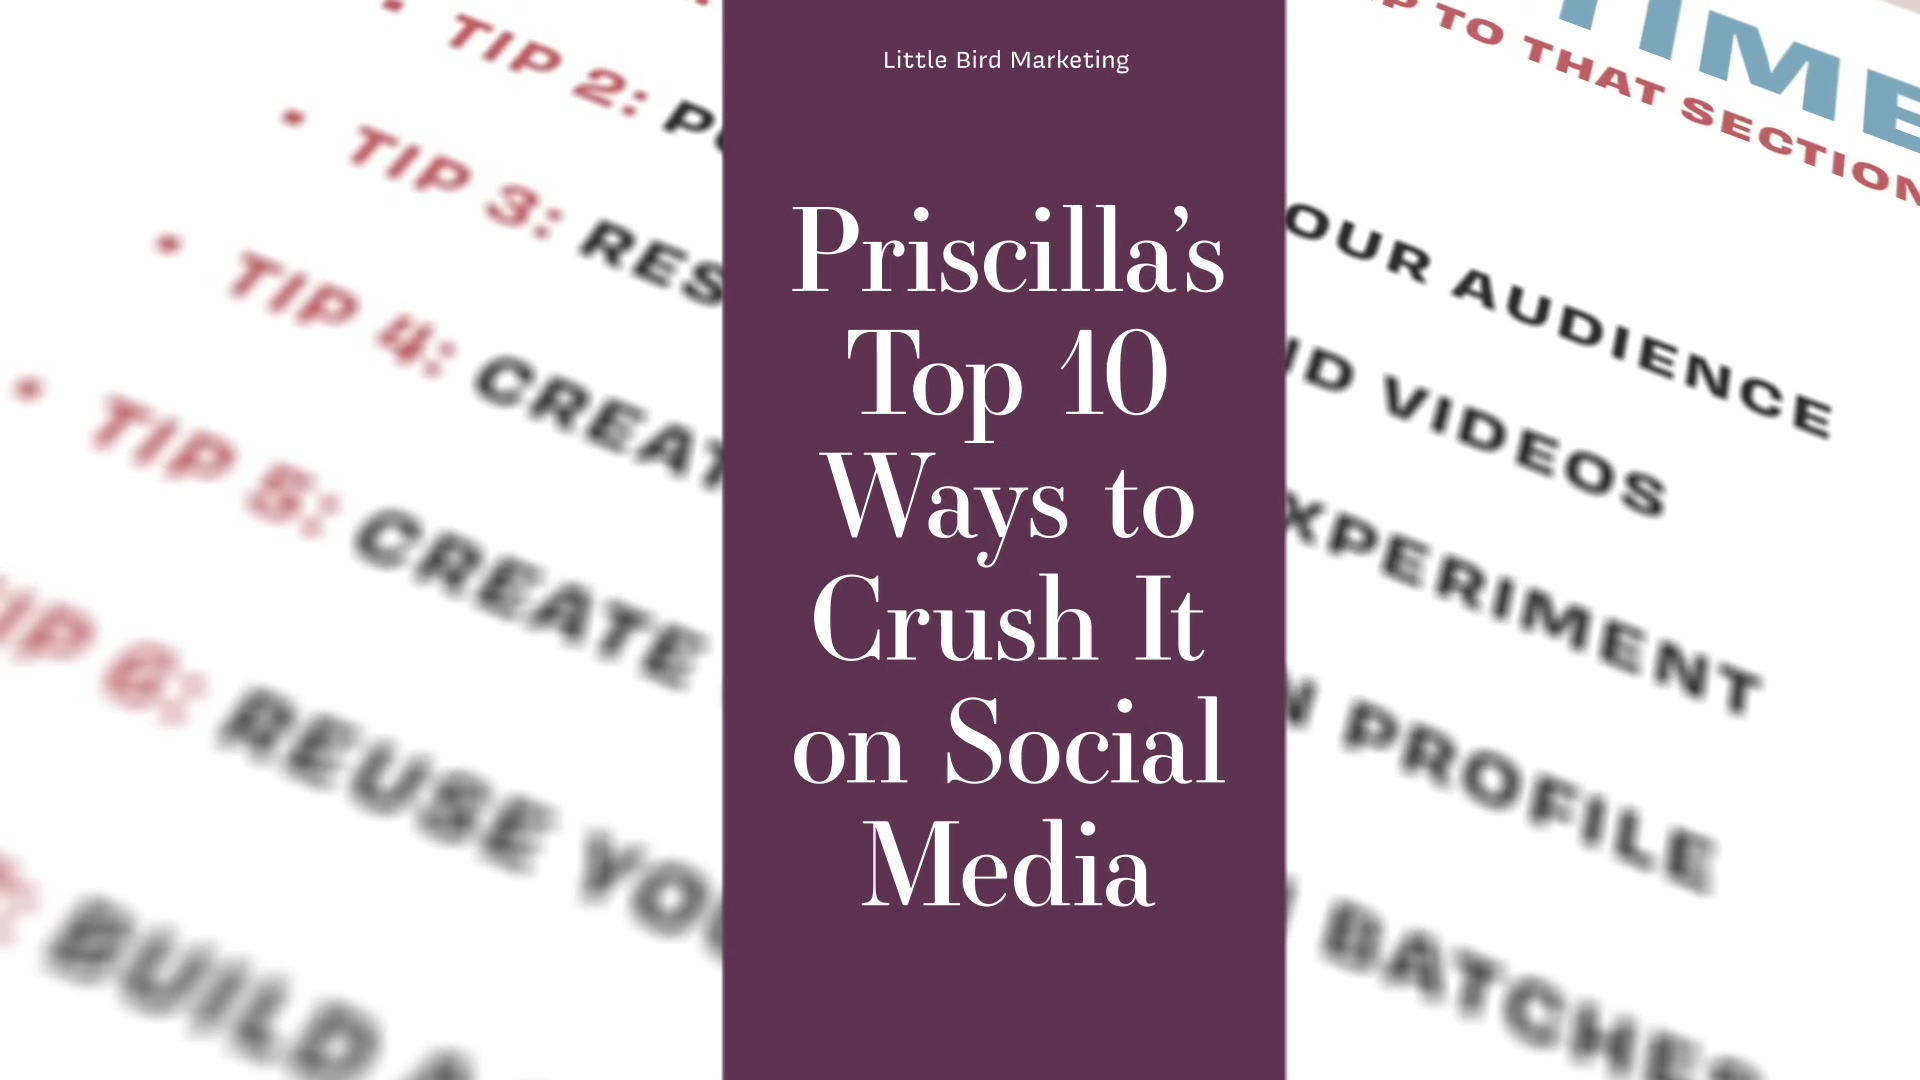 2020-lbm-priscillas-top-10-ways-to-crush-it-on-social-media